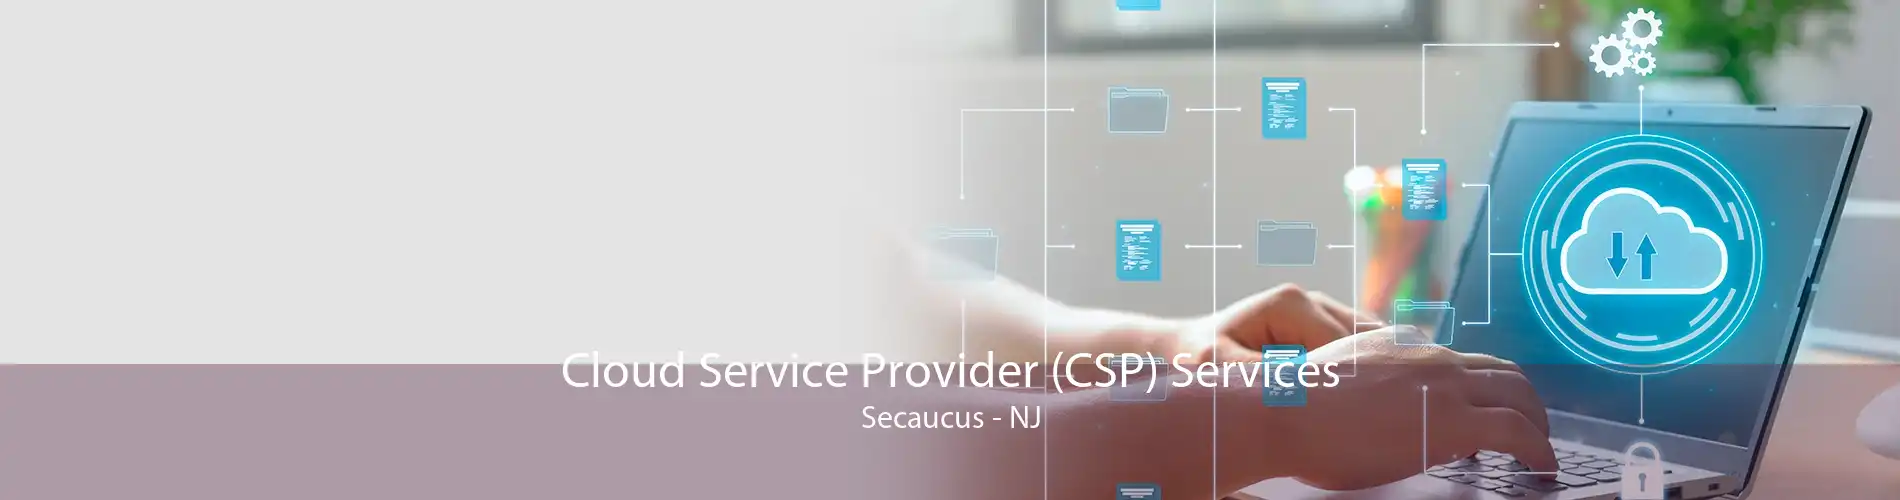 Cloud Service Provider (CSP) Services Secaucus - NJ